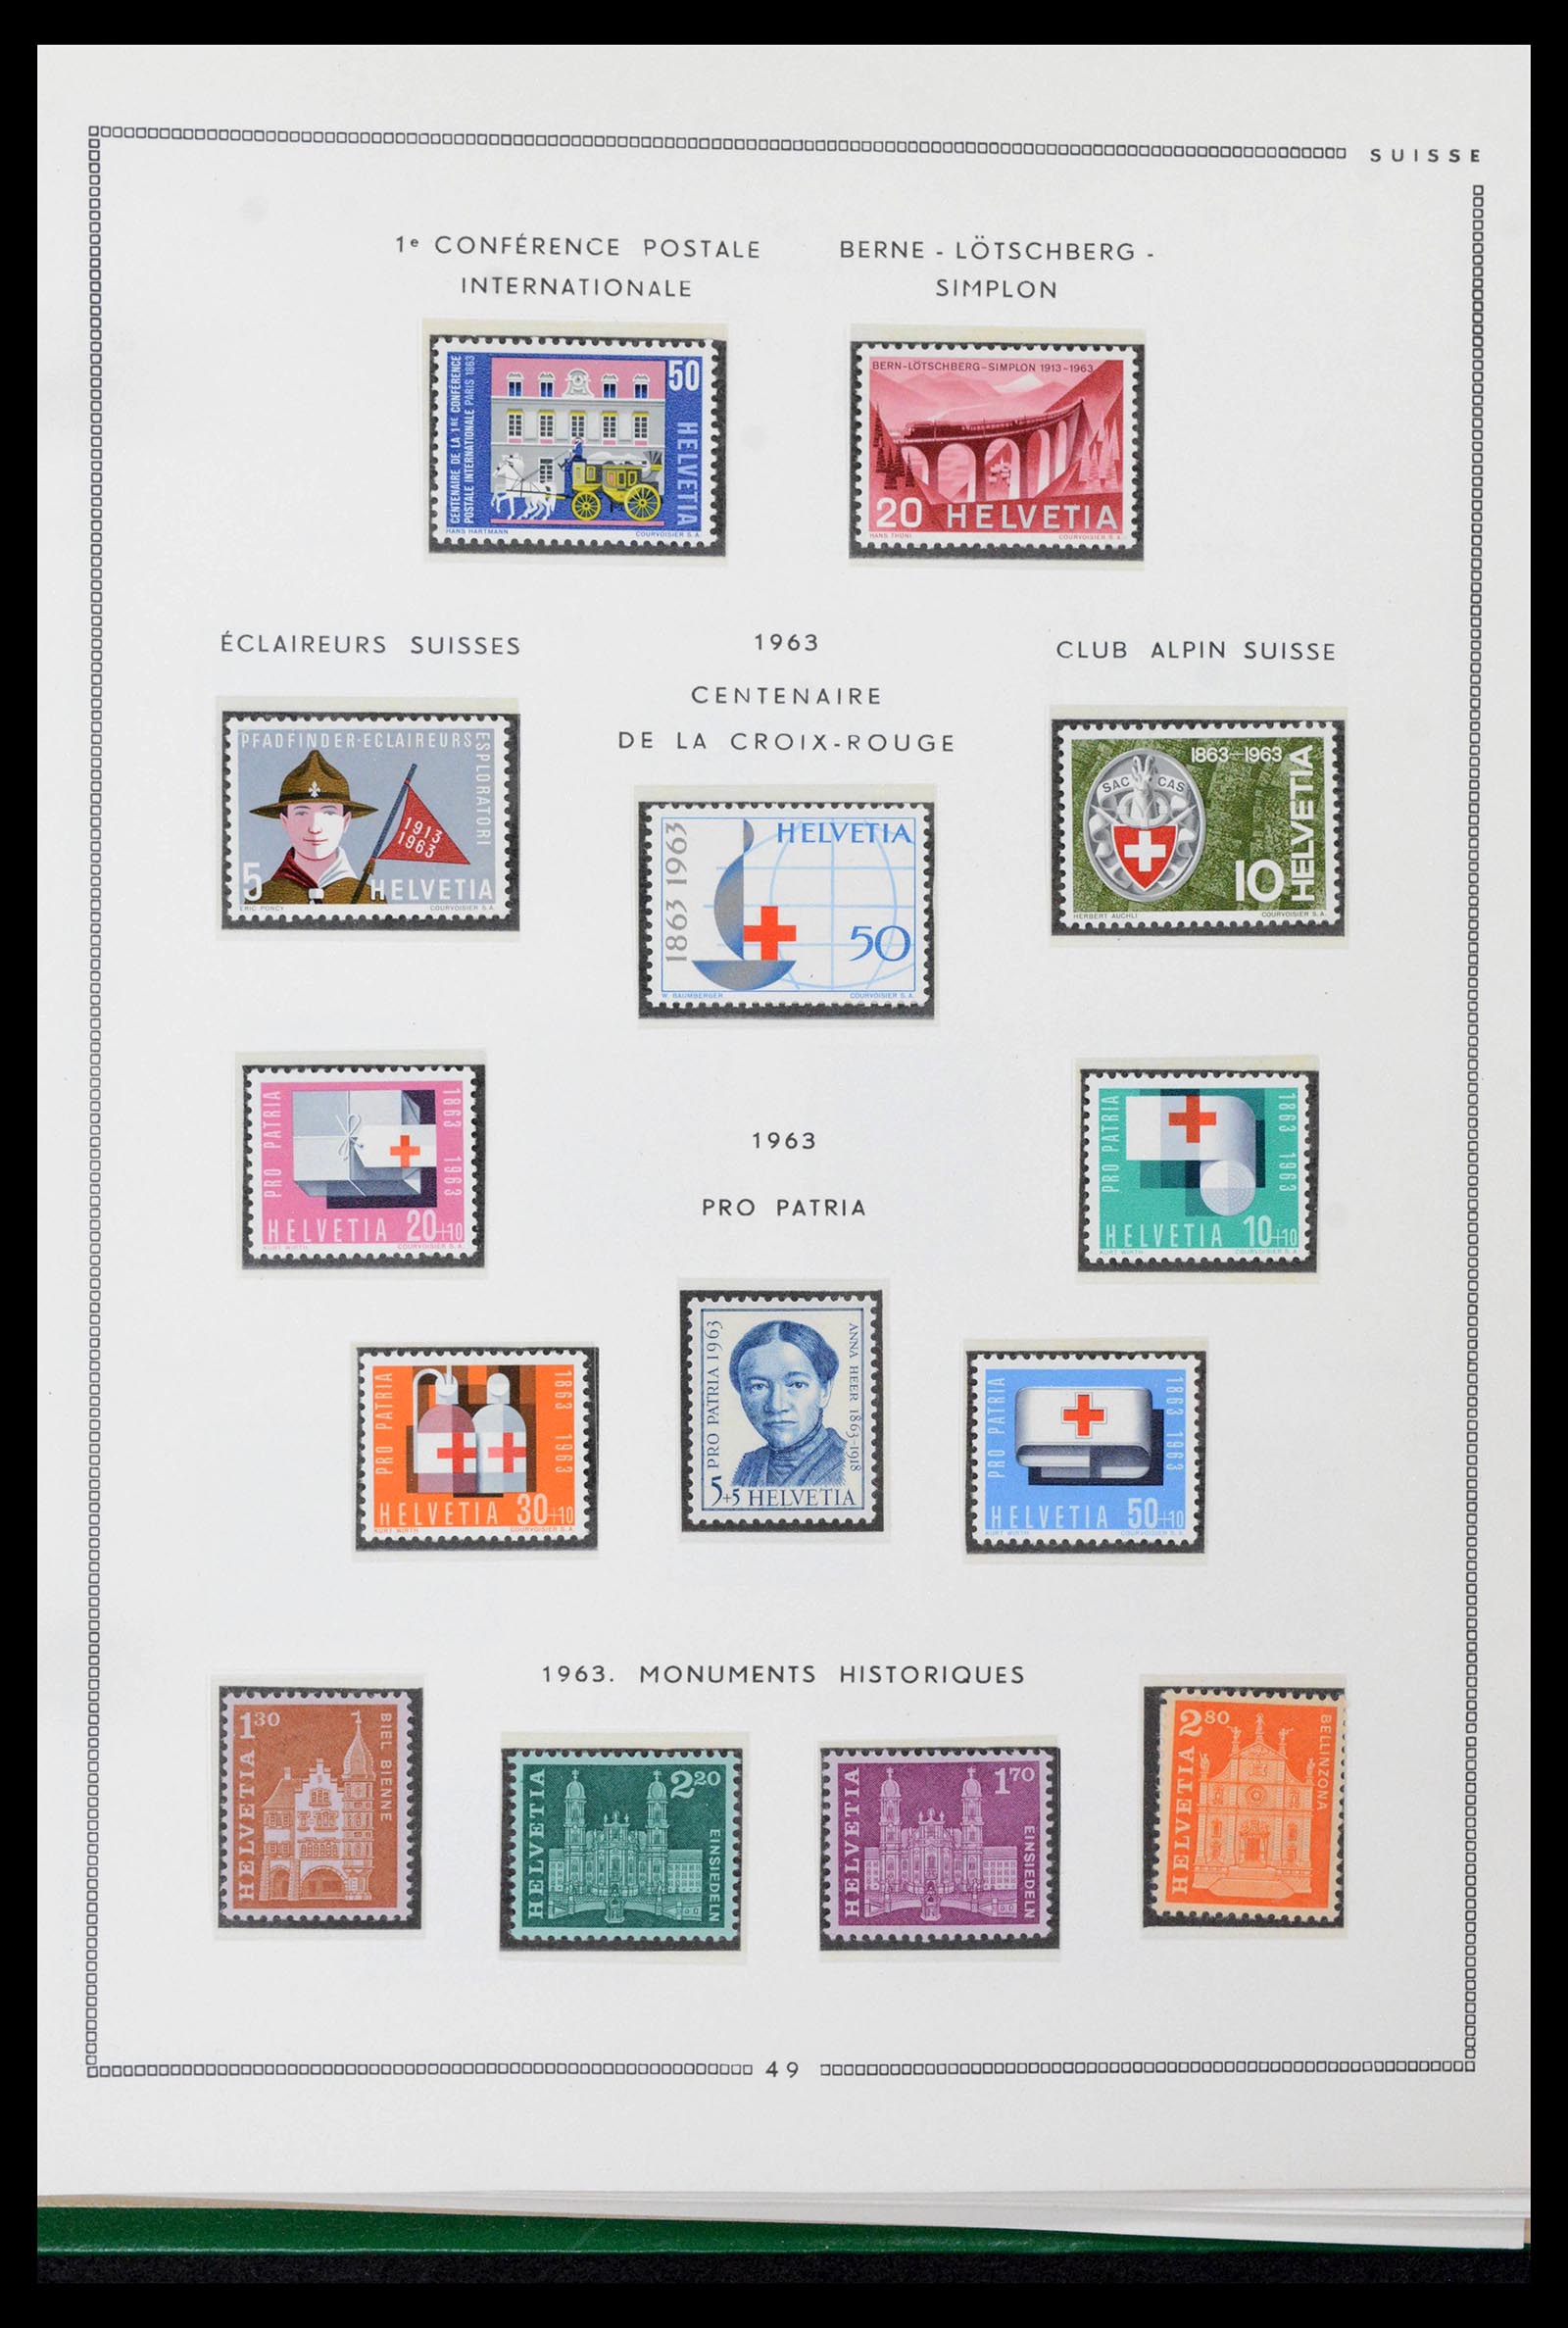 39096 0044 - Stamp collection 39096 Switzerland 1907-1963.